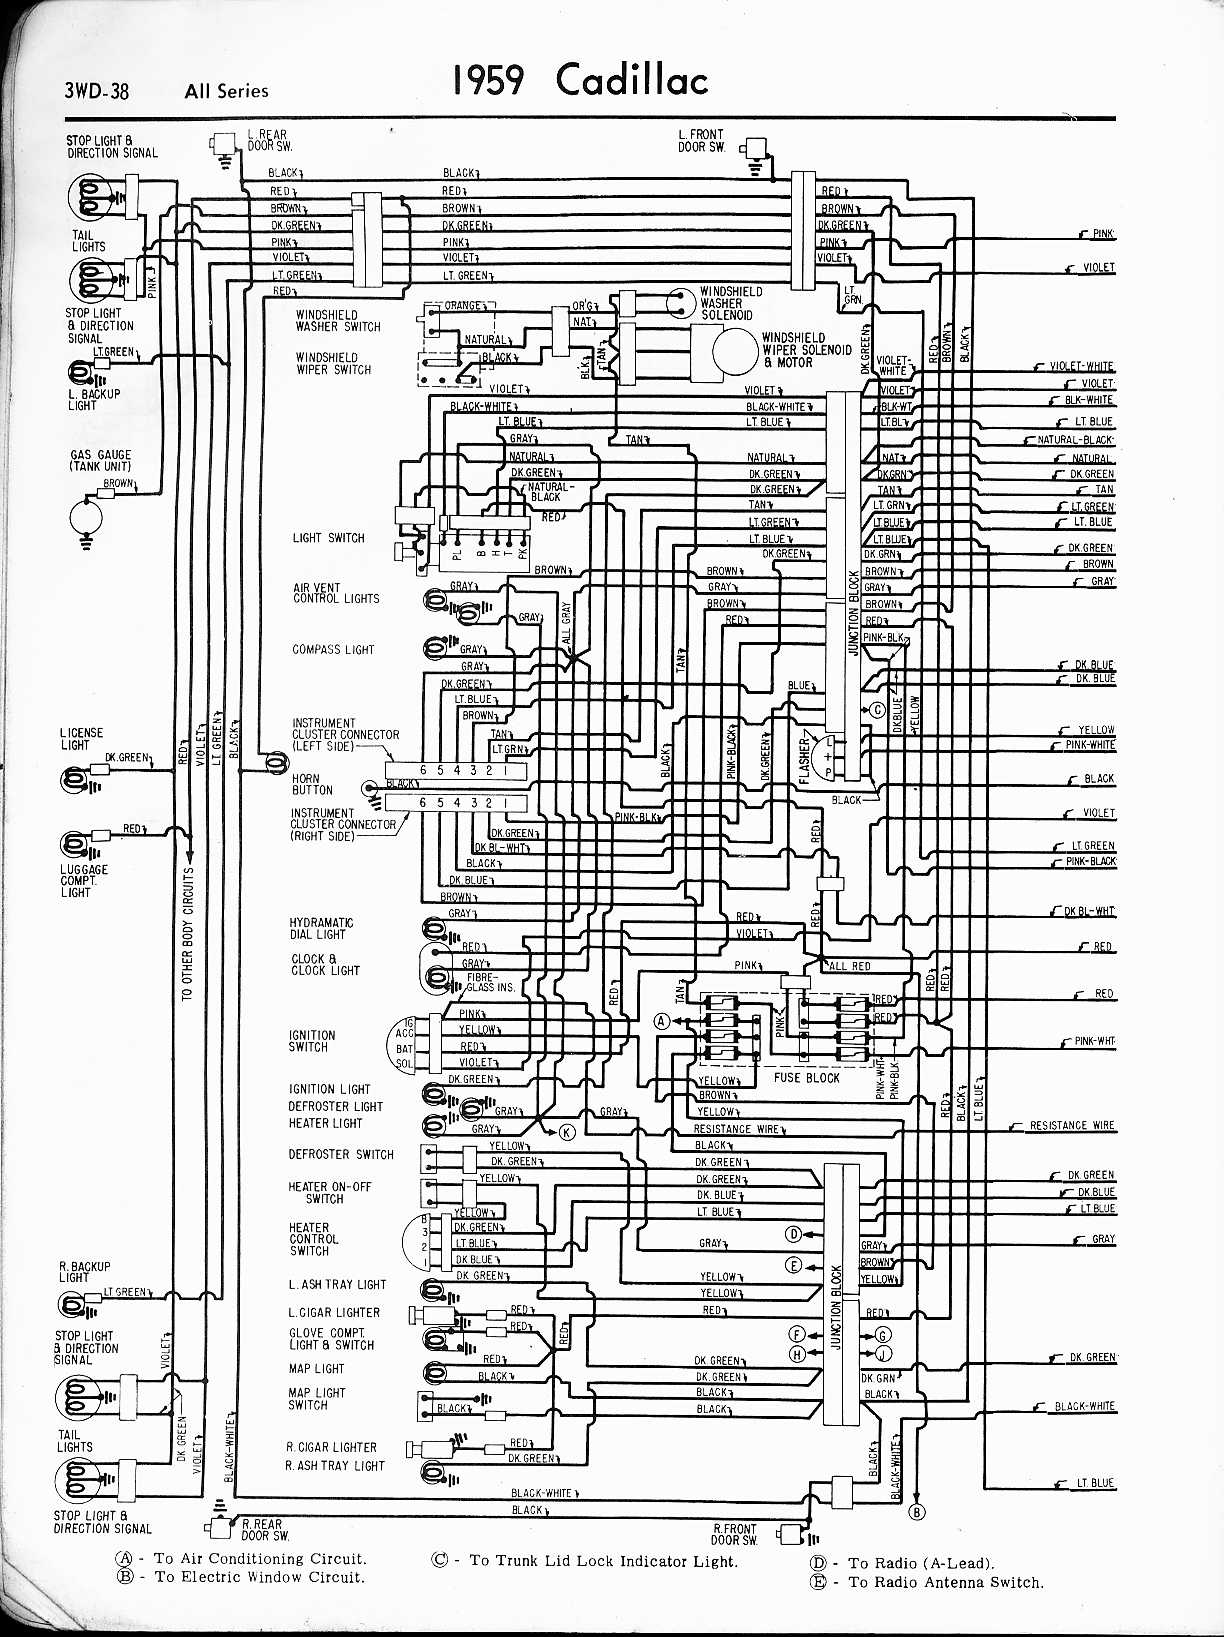 1959 Cadillac gas / fuel tank sending unit 1972 chevy truck wiring diagram pdf 